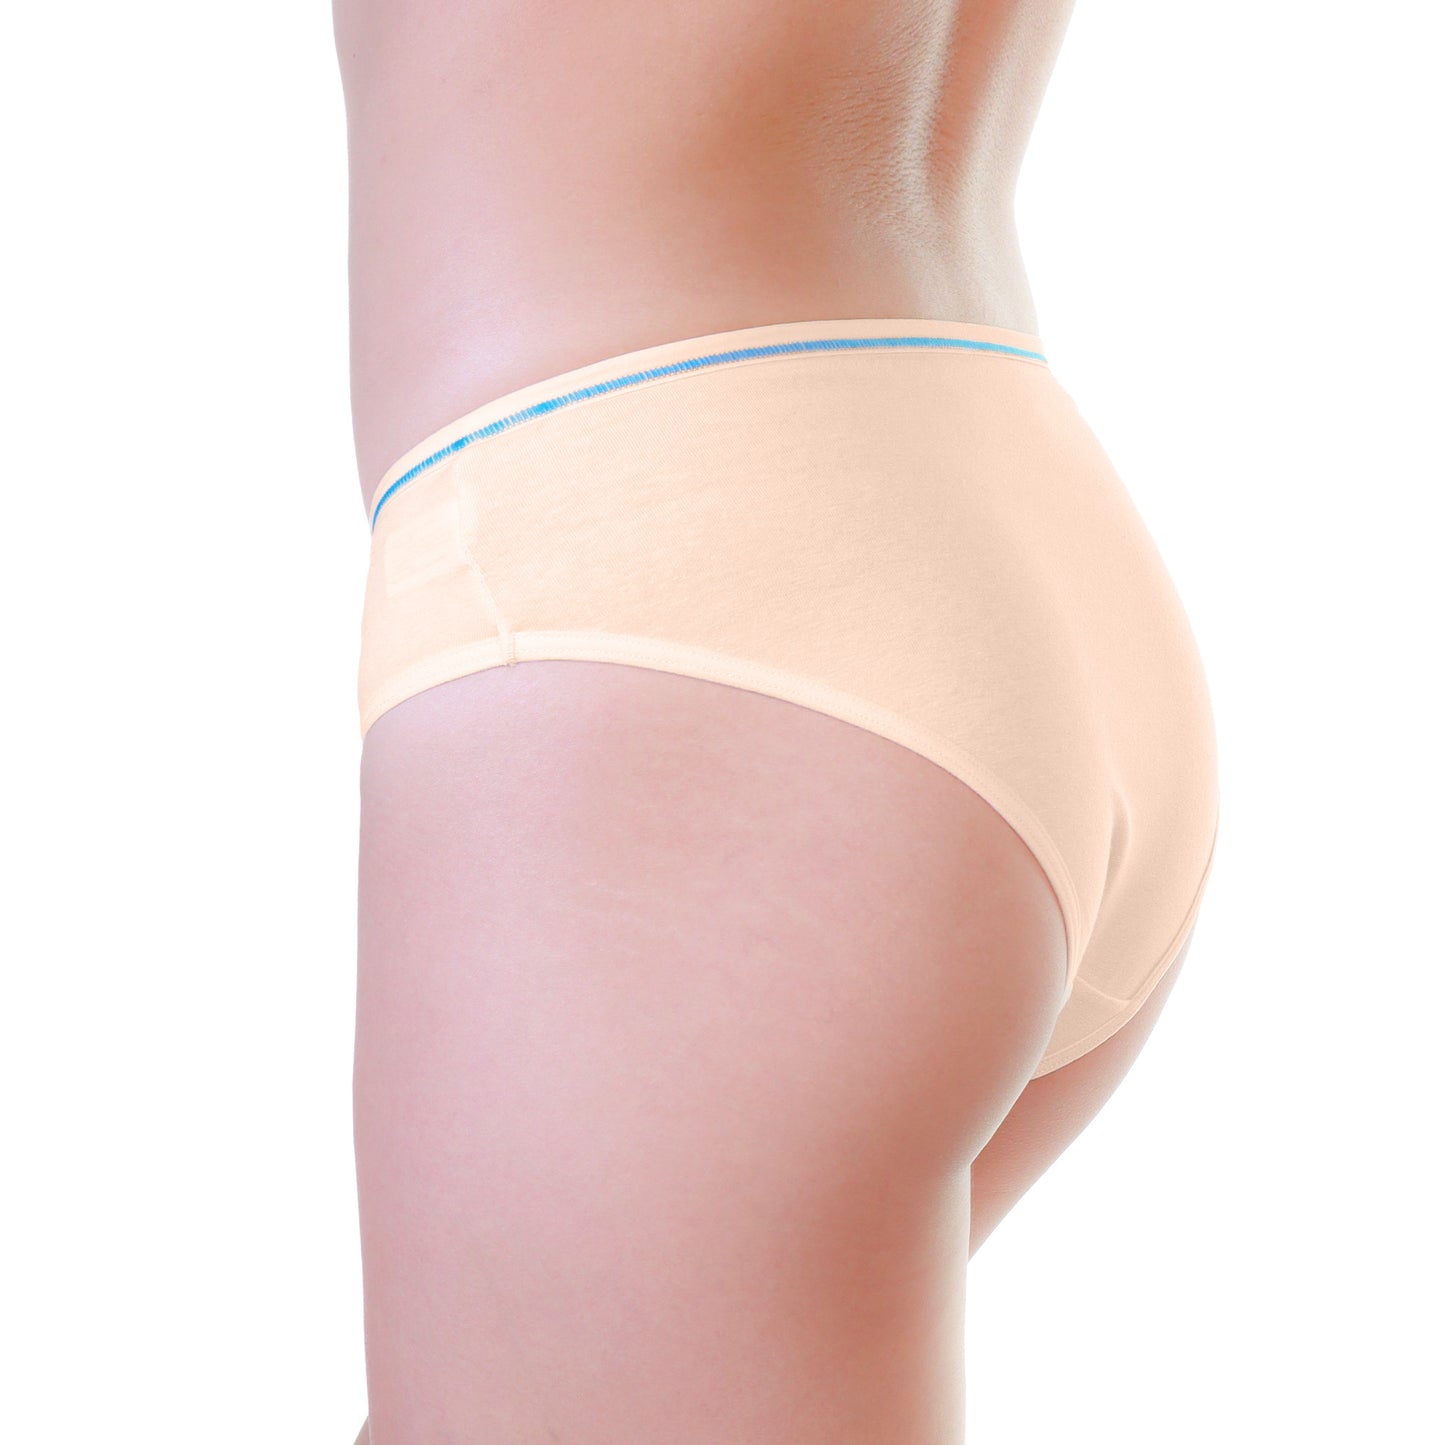 Angelina Cotton Bikini Panties with Rhinestone Detail (12-Pack), #G6814